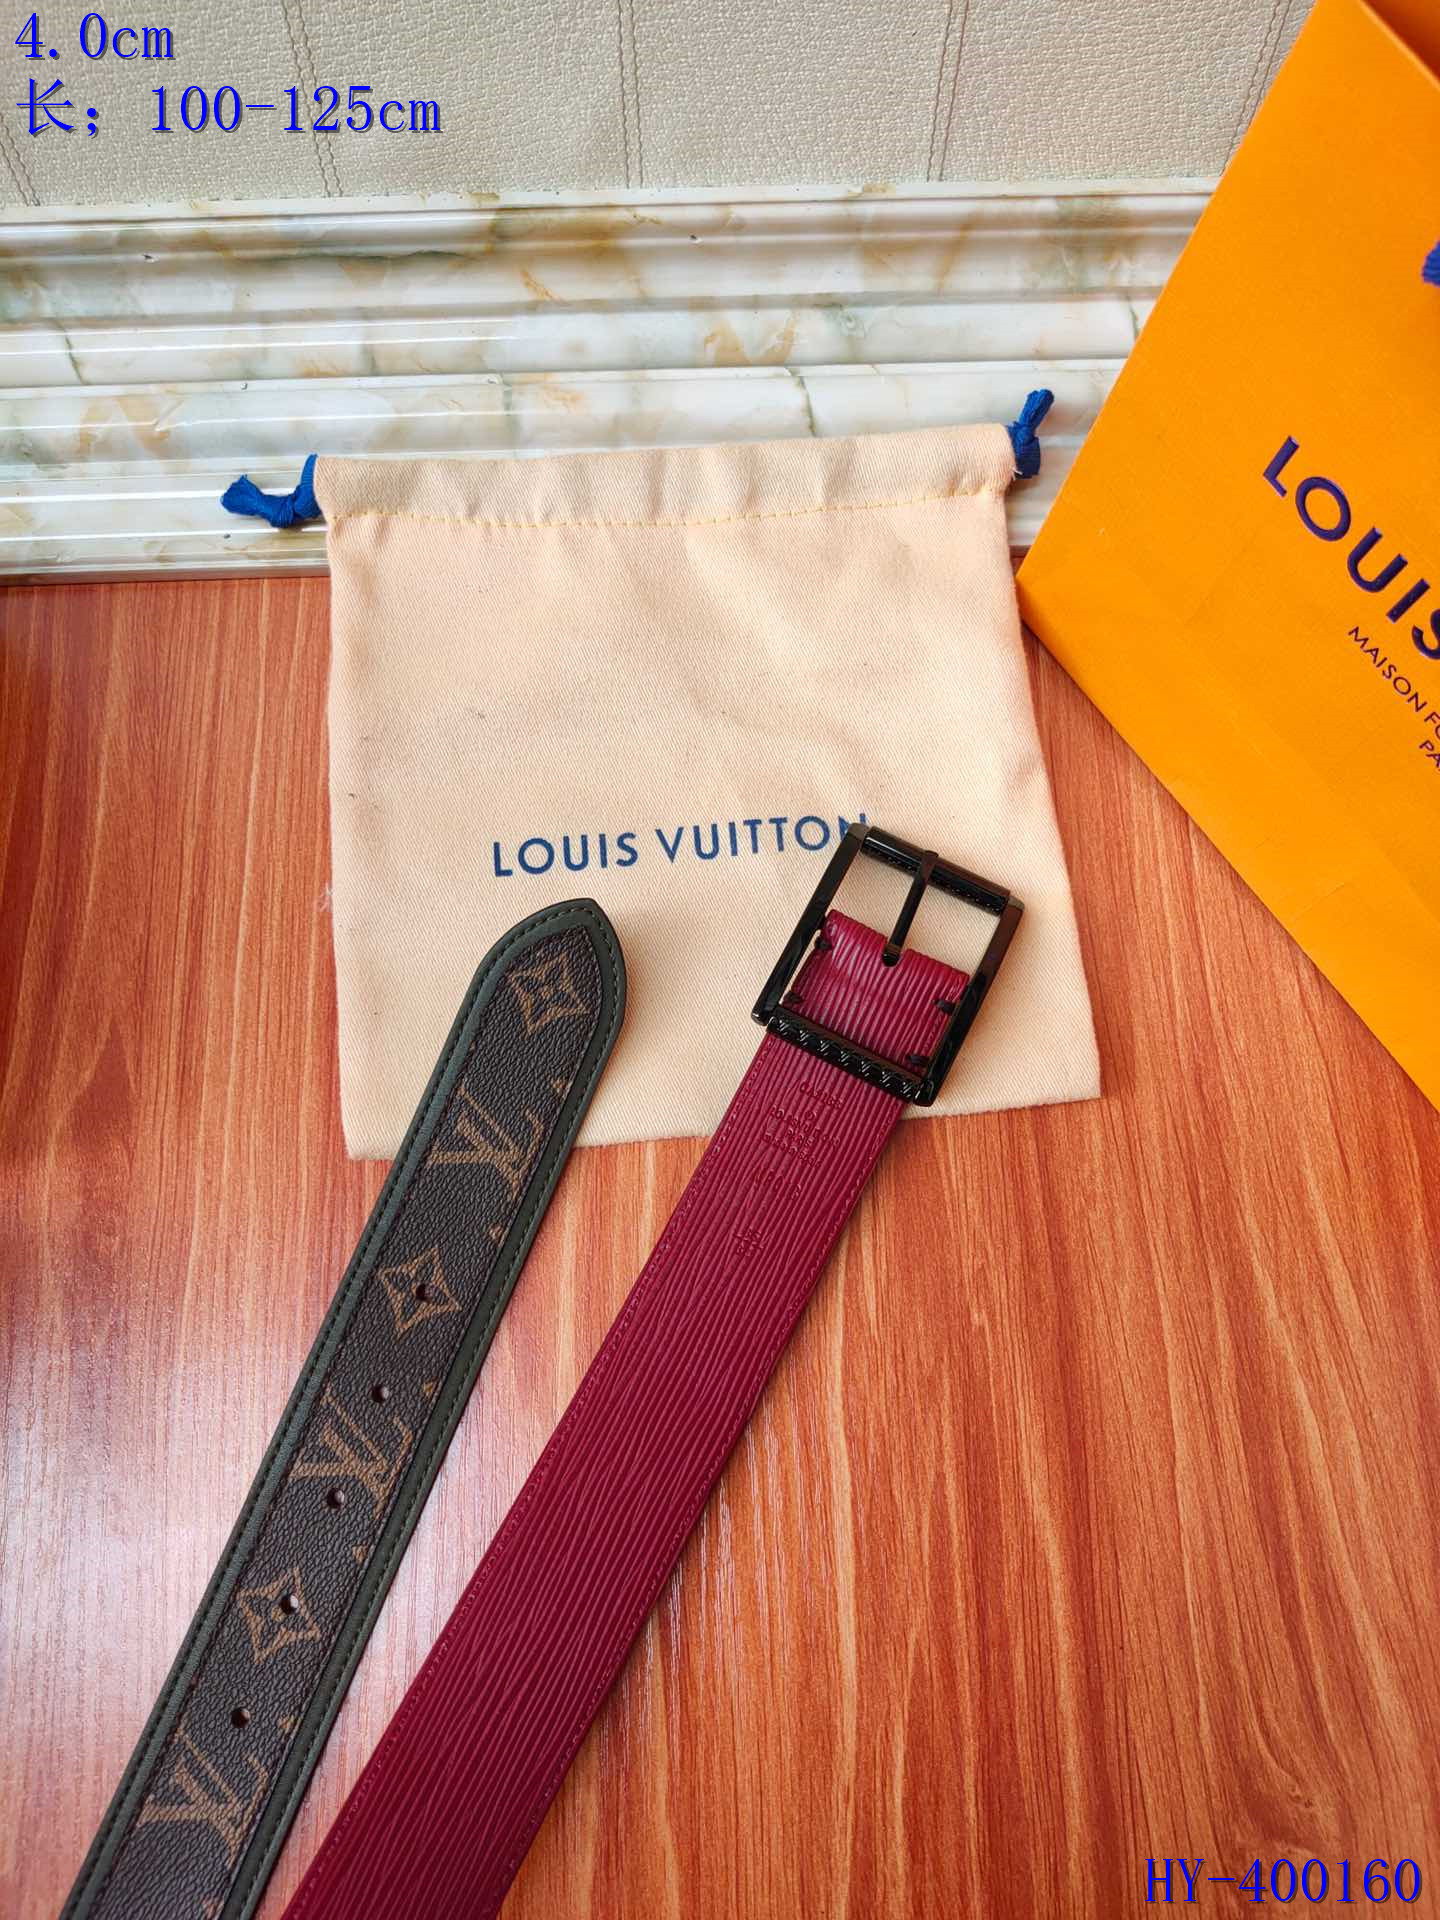 Louis Vuitton Belts Cost Less Than $100 To Make! 🤯 #louisvuitton